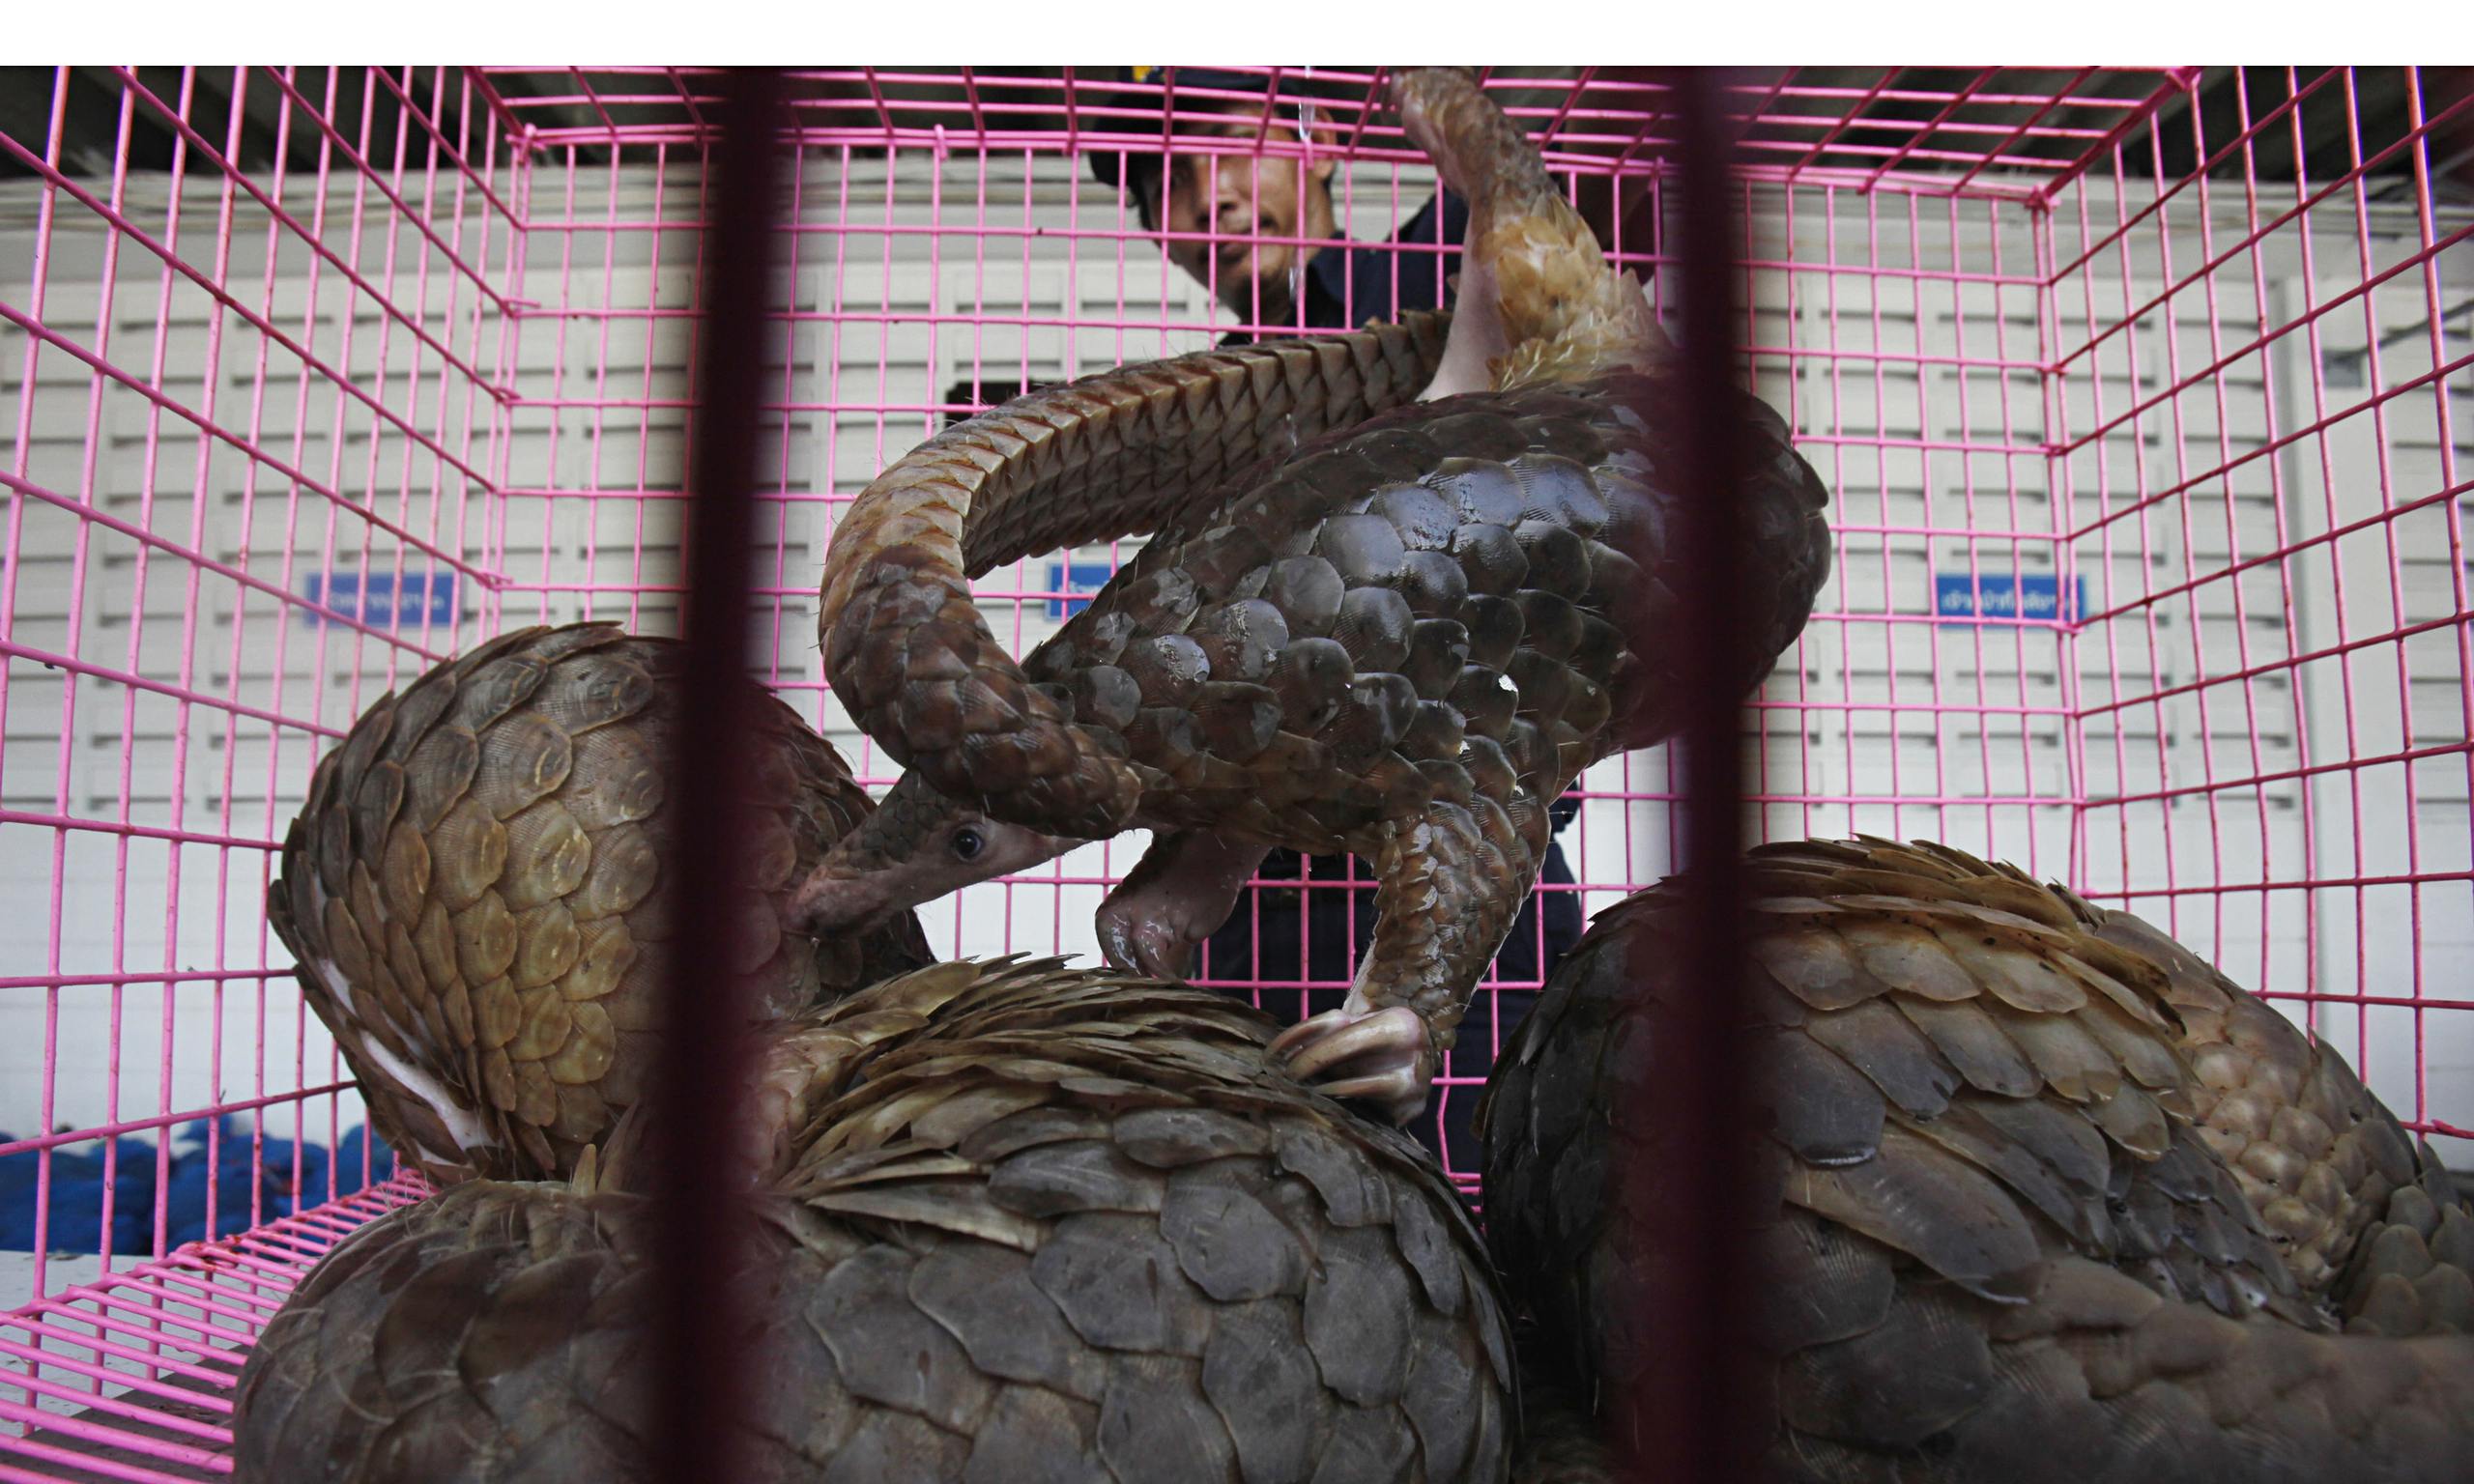 China hopes to take rare animals off the menu with tough jail sentences | Environment ...2560 x 1536